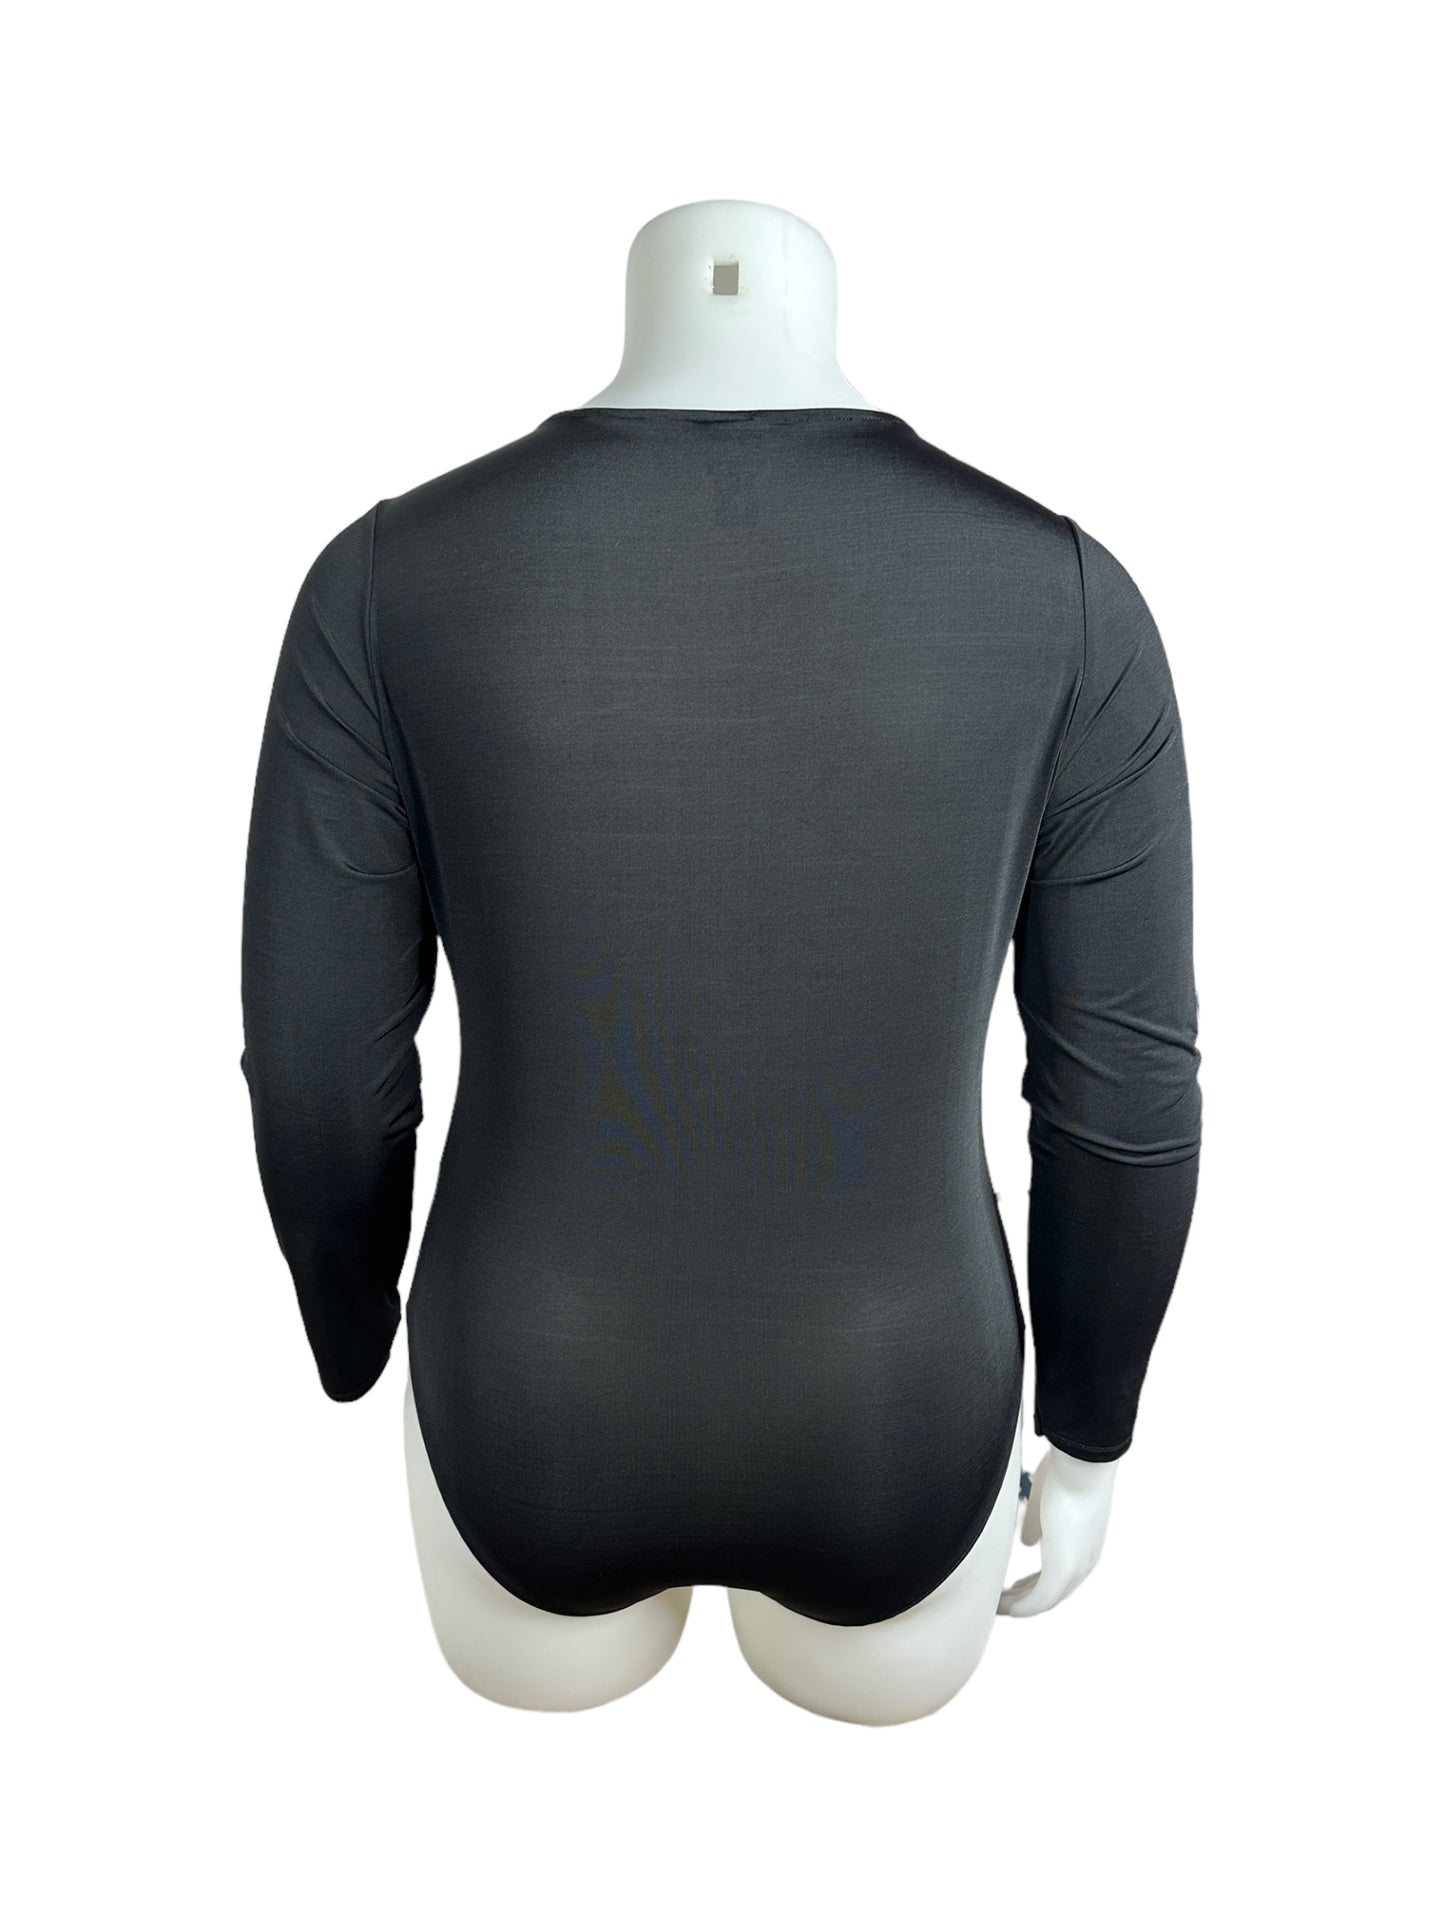 “H&M” Long Sleeve V-neck Black Bodysuit (XL)